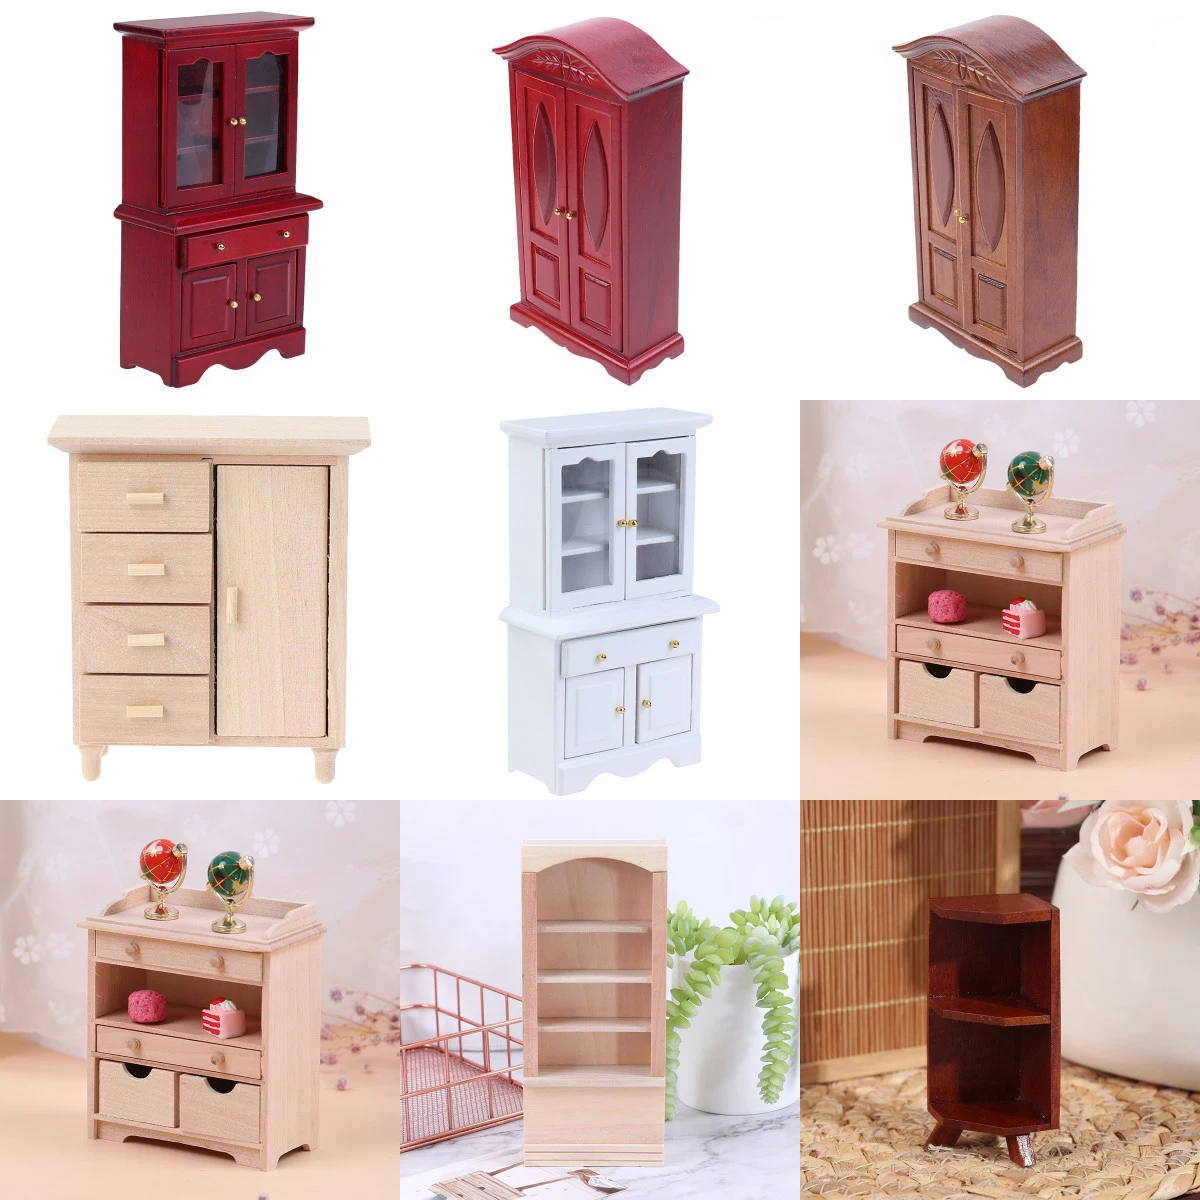 

Wardrobe Mini Book Bookshelf Cabinet Bedroom Furniture Model Kits Home Living For Dollhouse Scale Miniature